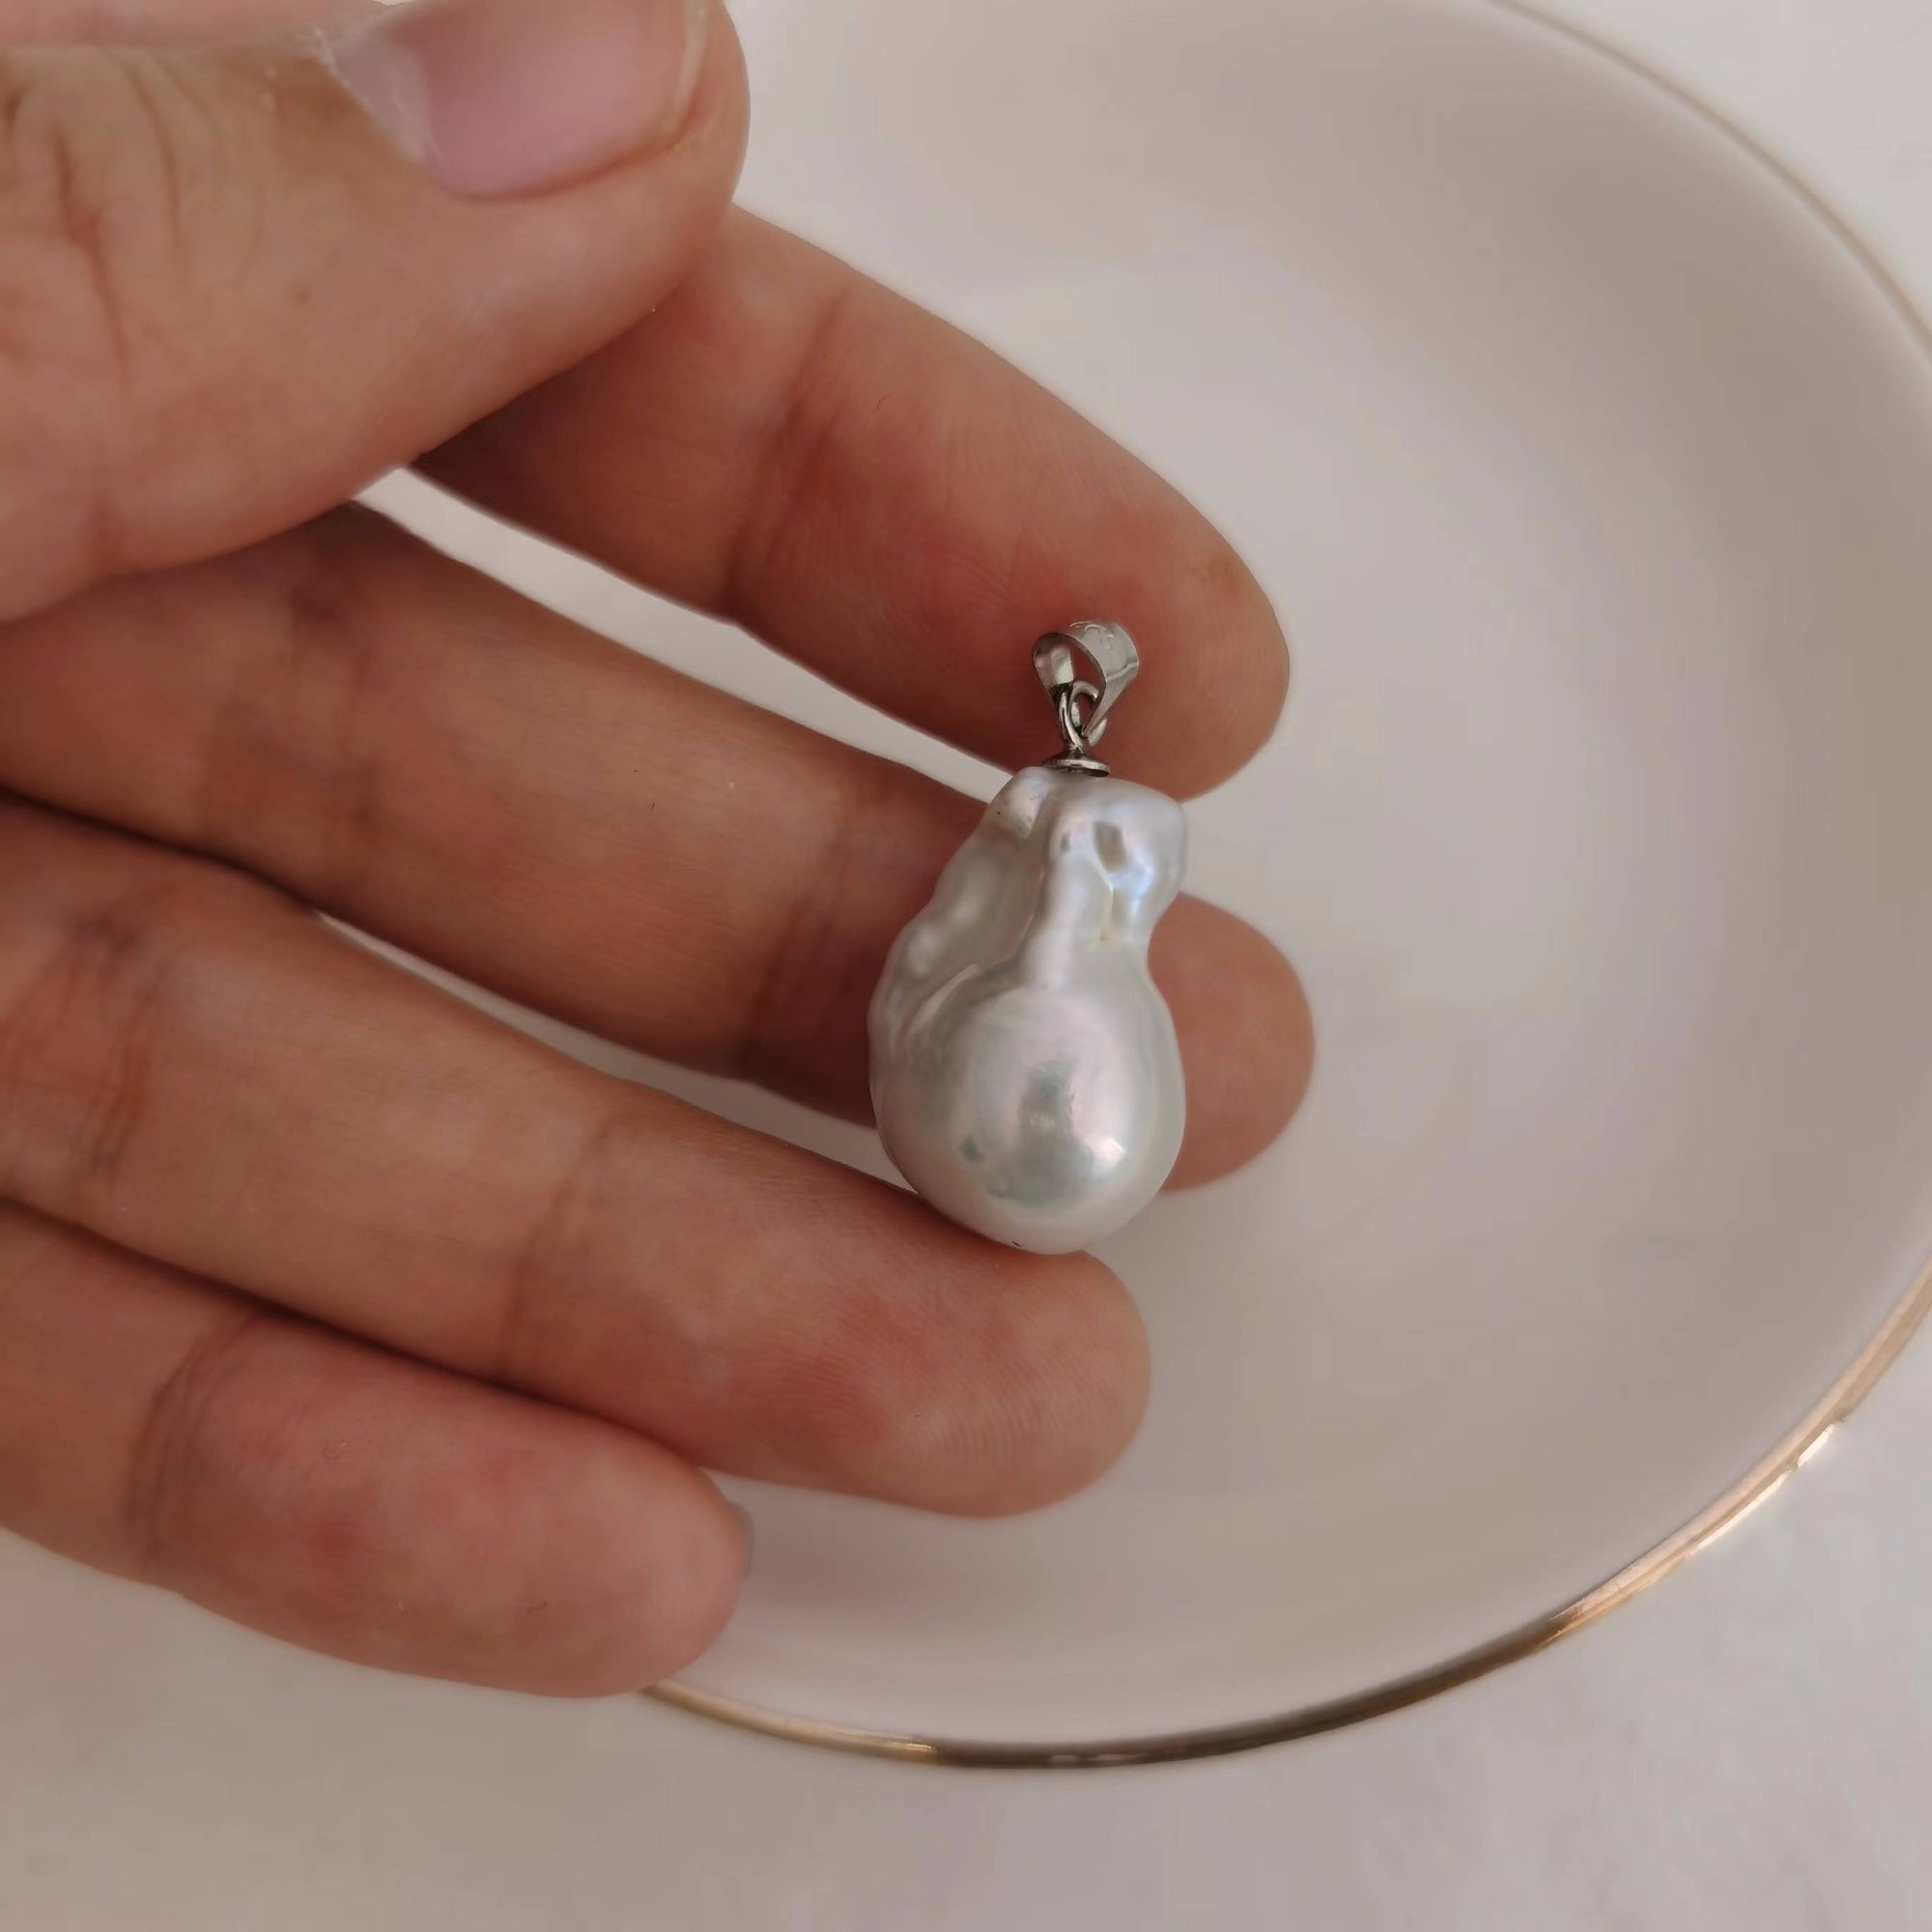 1pc 12-13mm Teardrop Baroque pearl pendant, S925 sterling silver